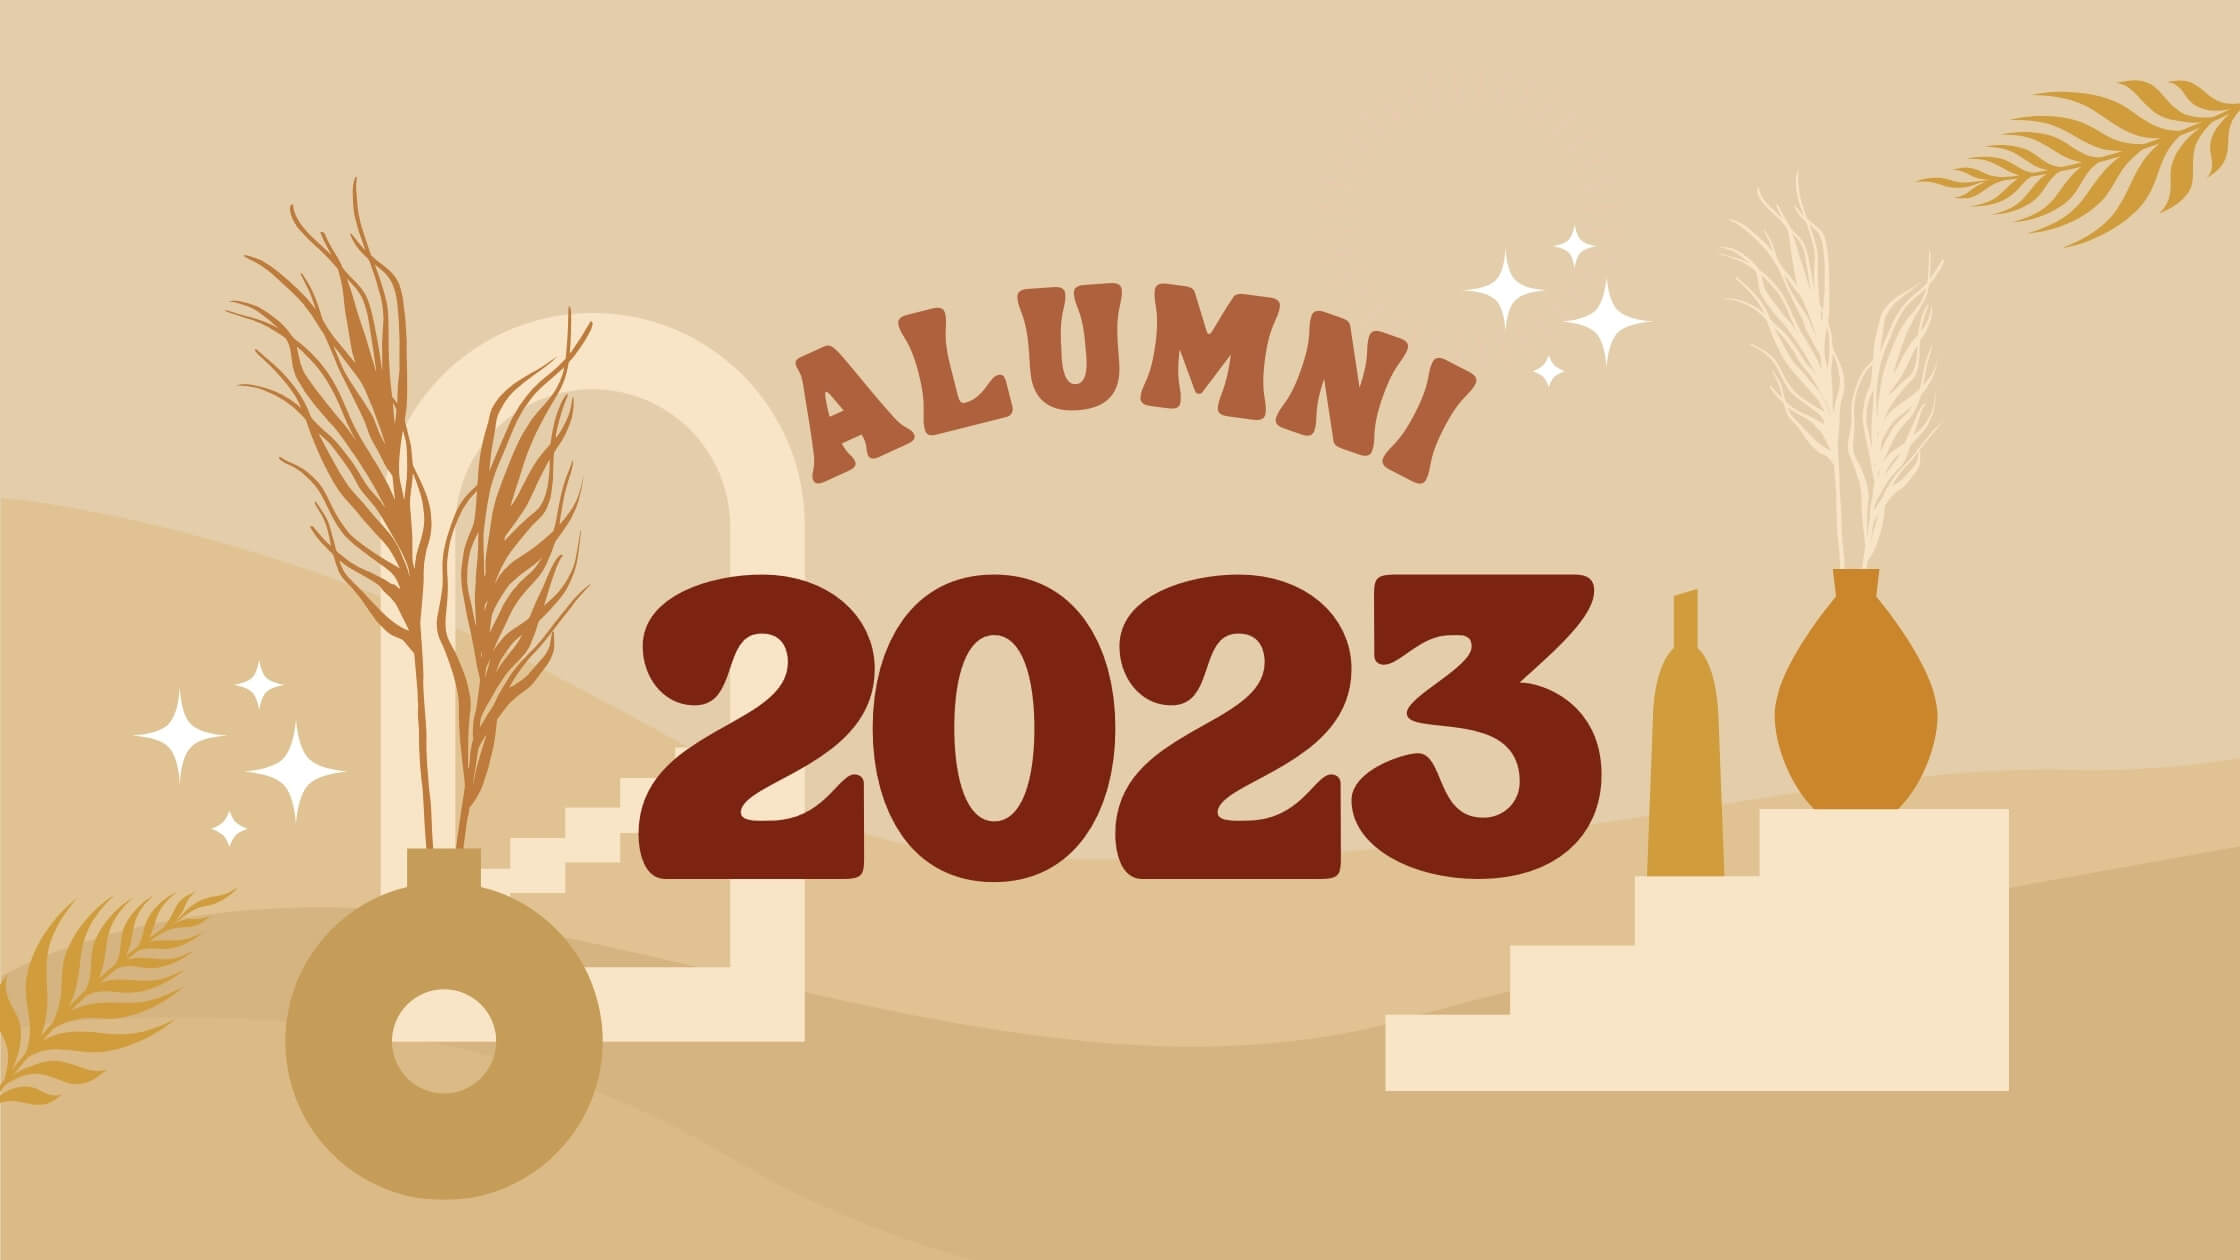 Alumni 2023